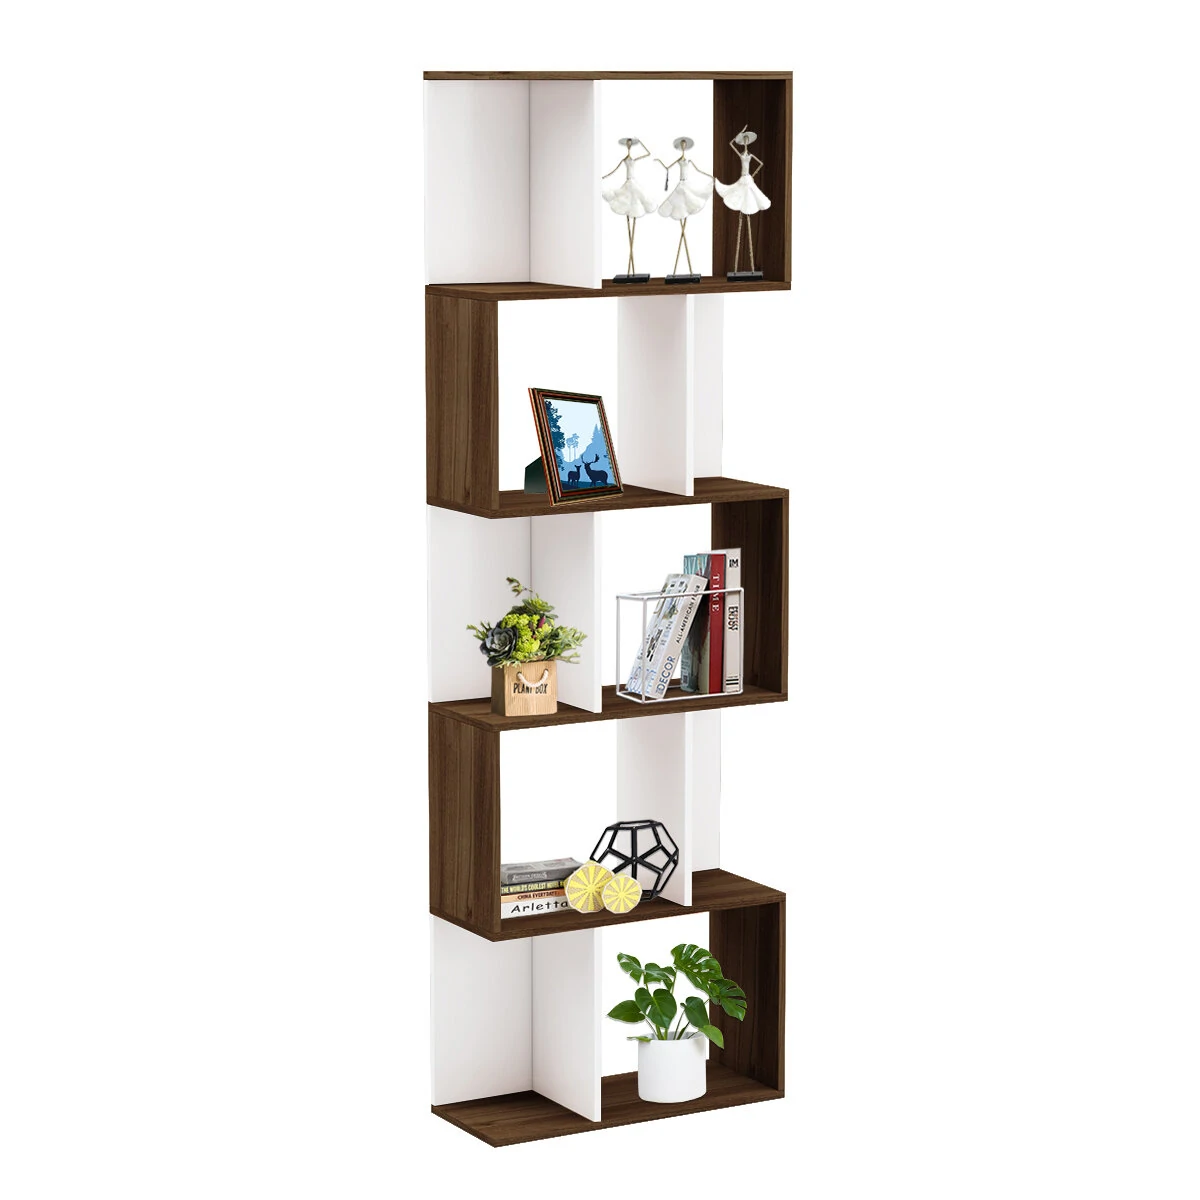 Hoffree wooden s-shaped bookcase modern display shelves storage unit divider